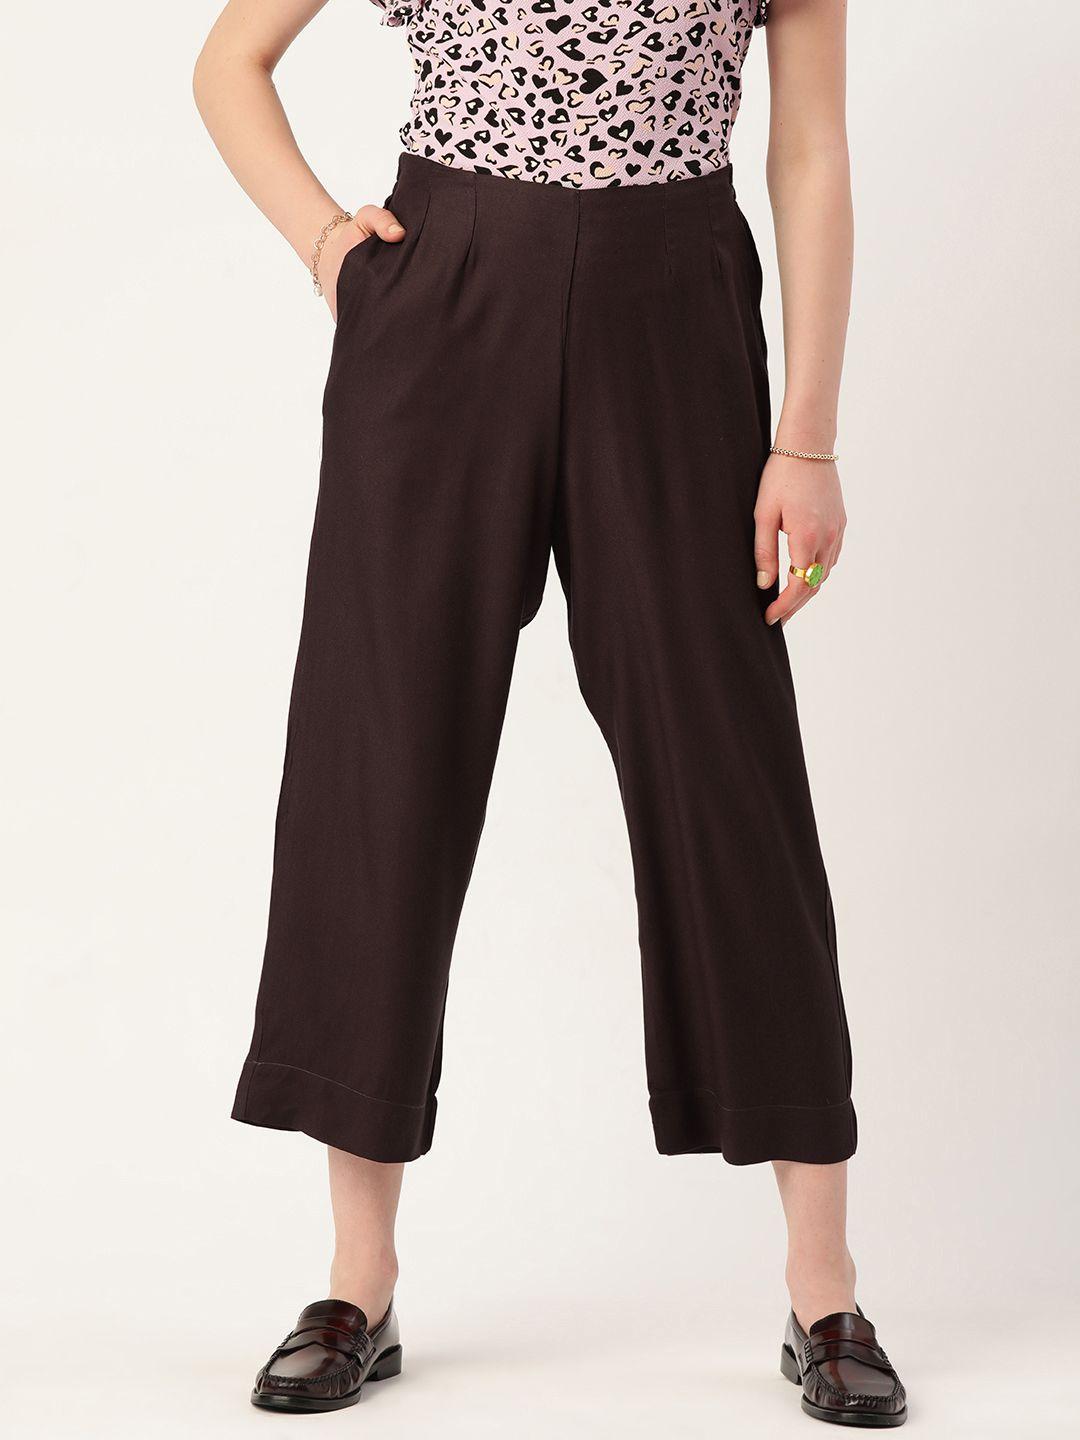 dressberry-women-culottes-trousers